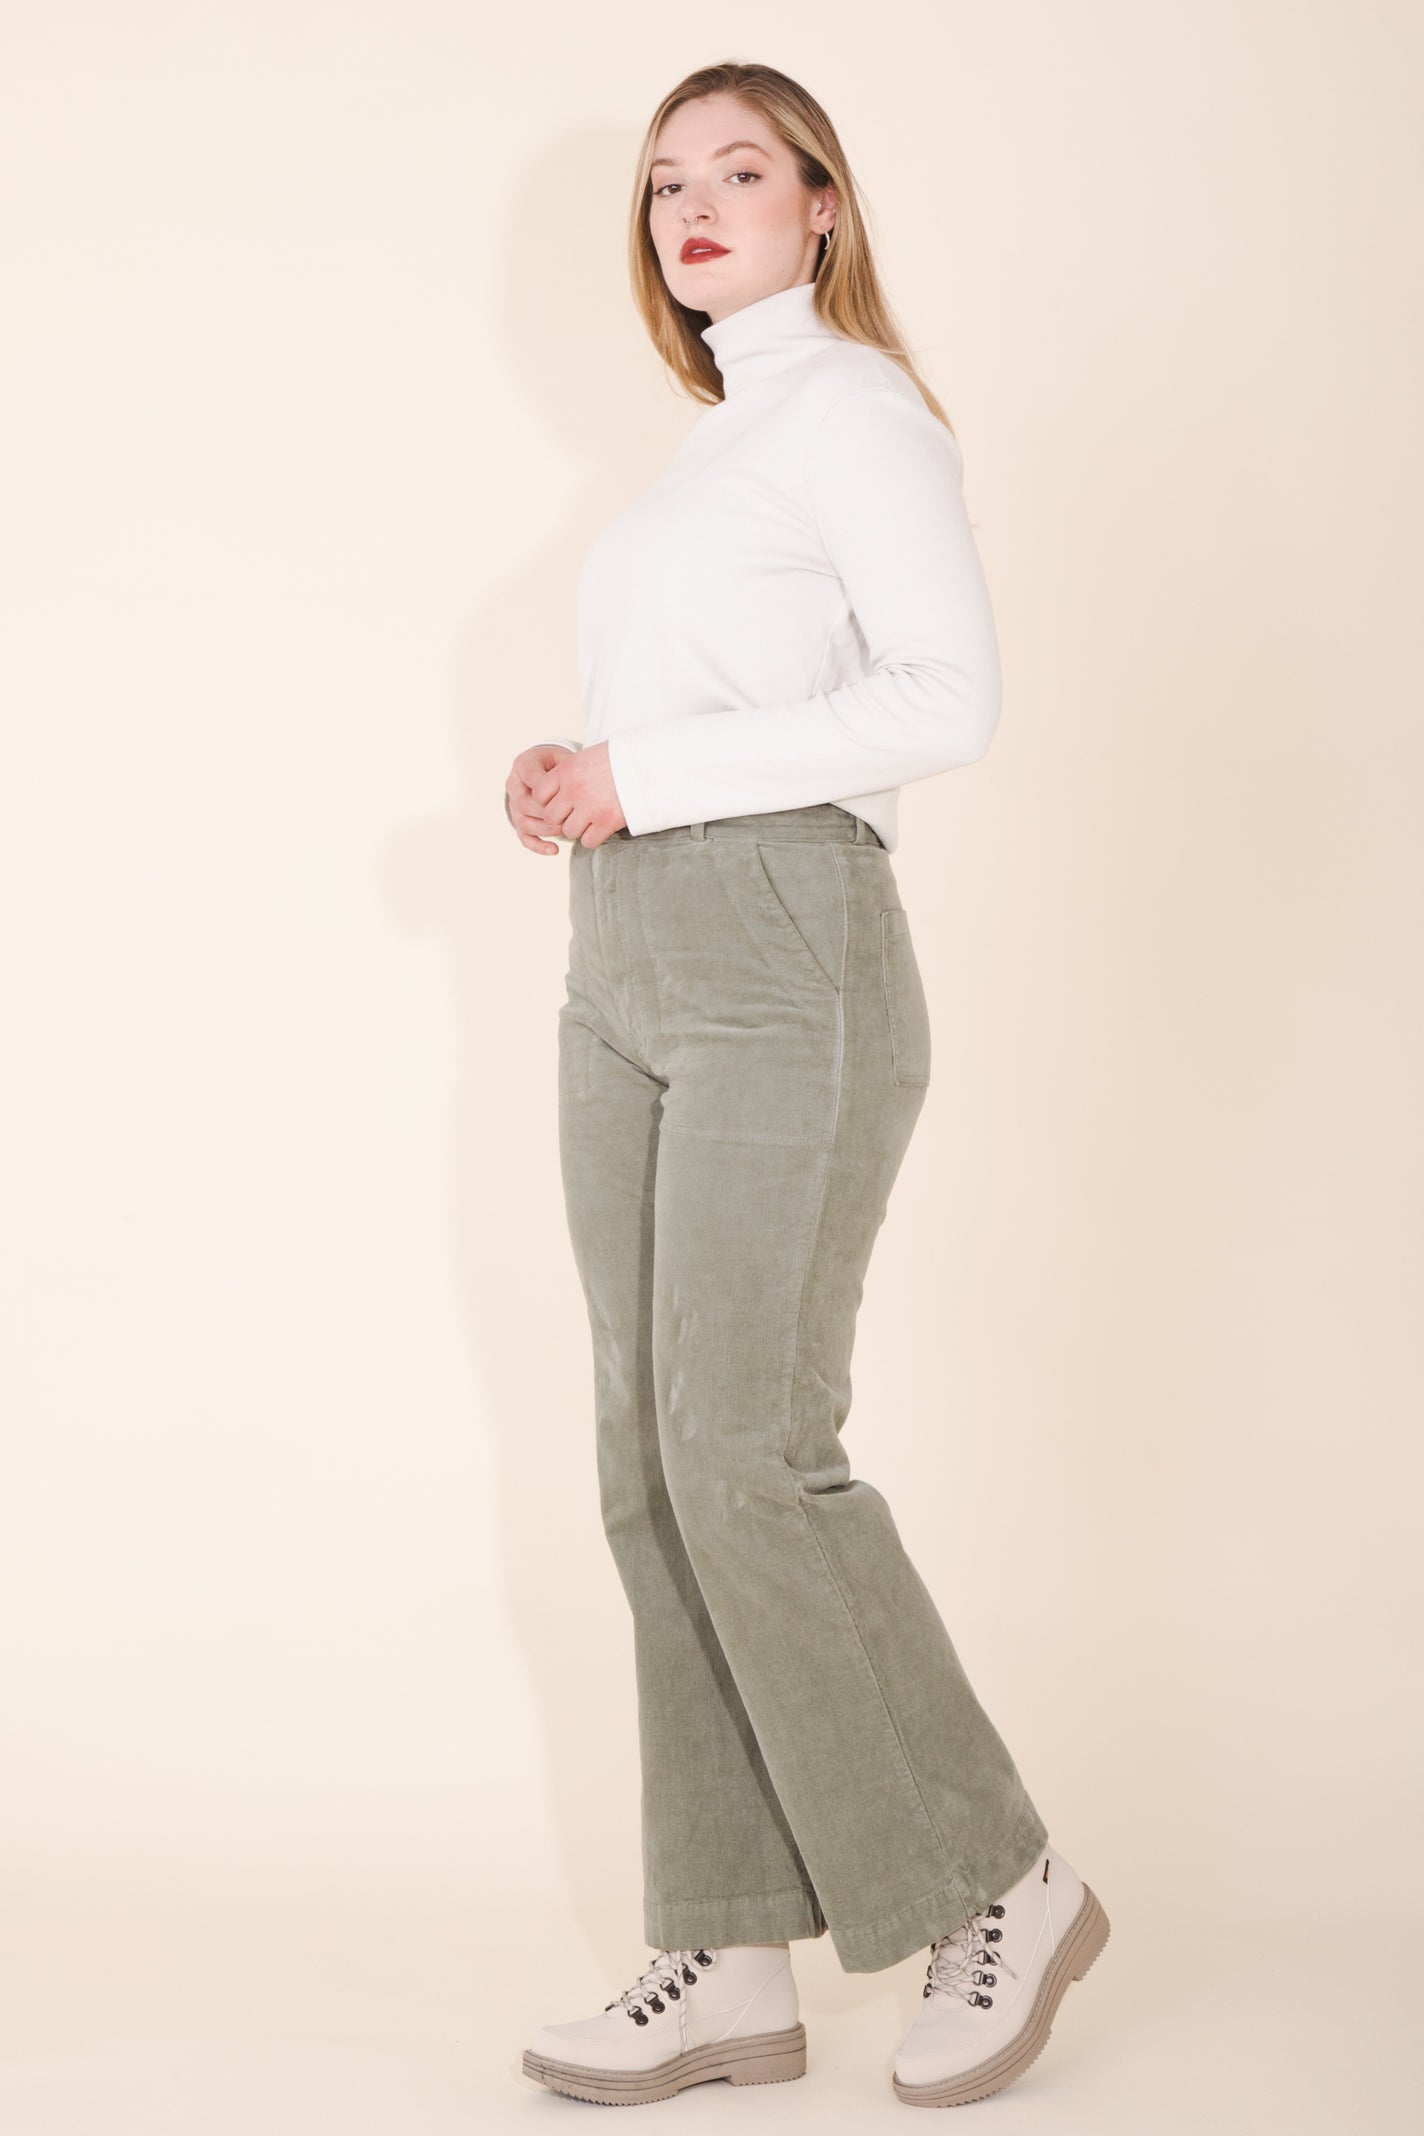 PRAIRIE UNDERGROUND • Organic Cotton Leggings Pants. Small fits